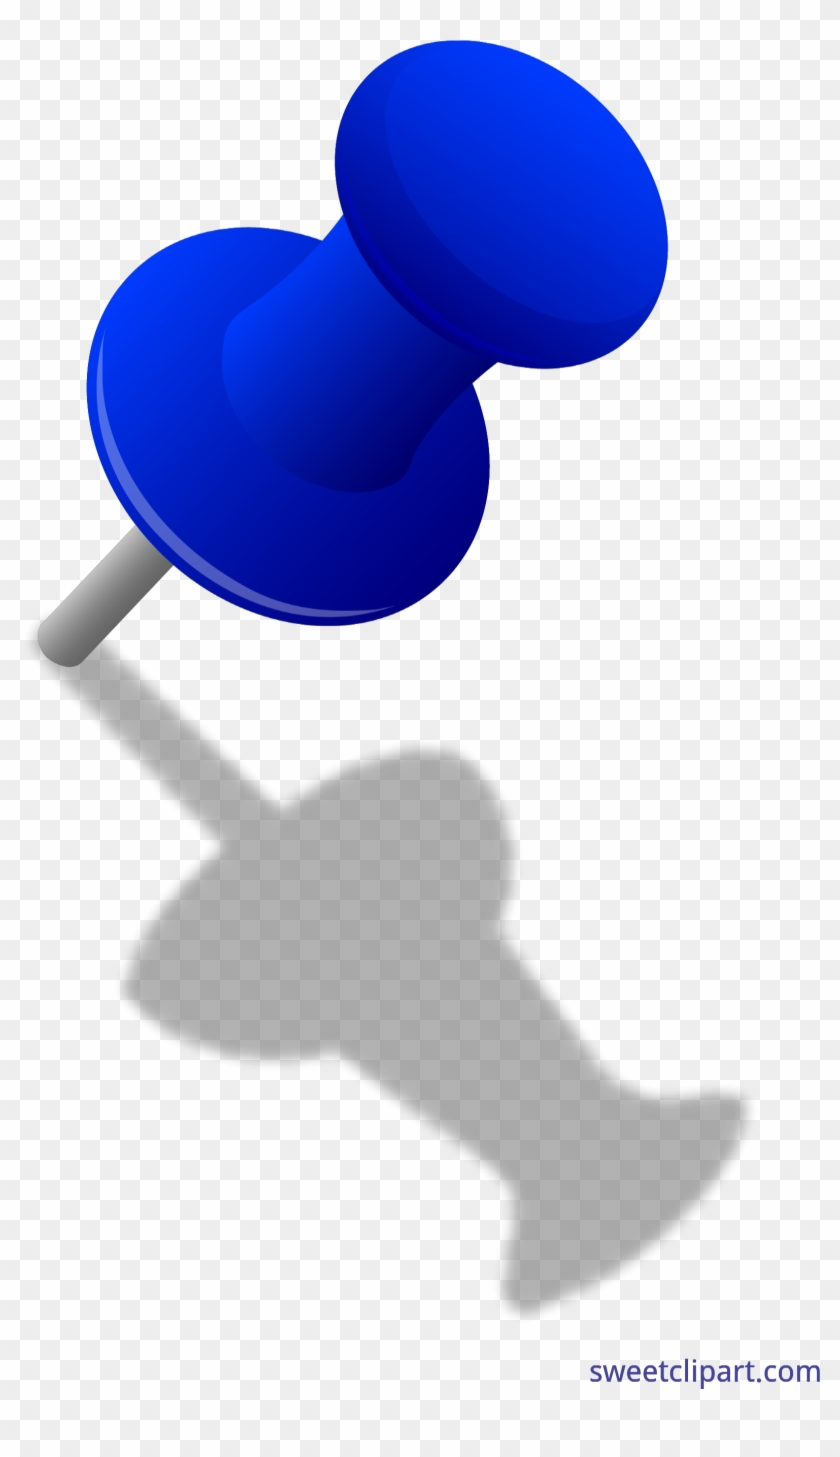 Thumb Tack PNG Transparent Images Free Download, Vector Files